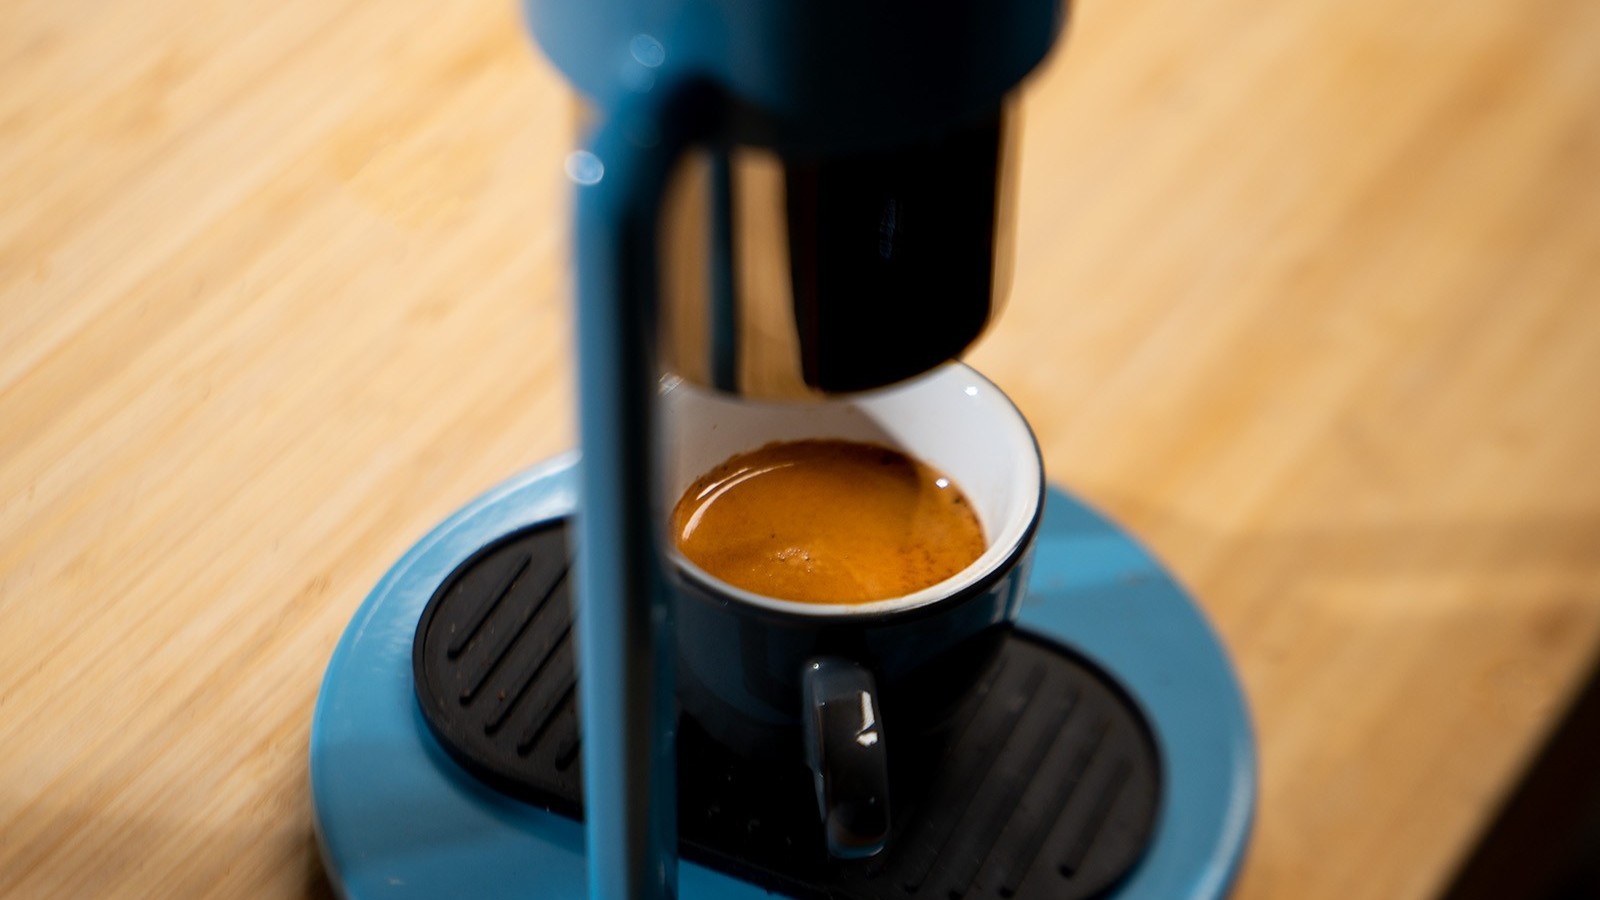 Image of Cafelat Robot Declining Pressure Espresso Shot